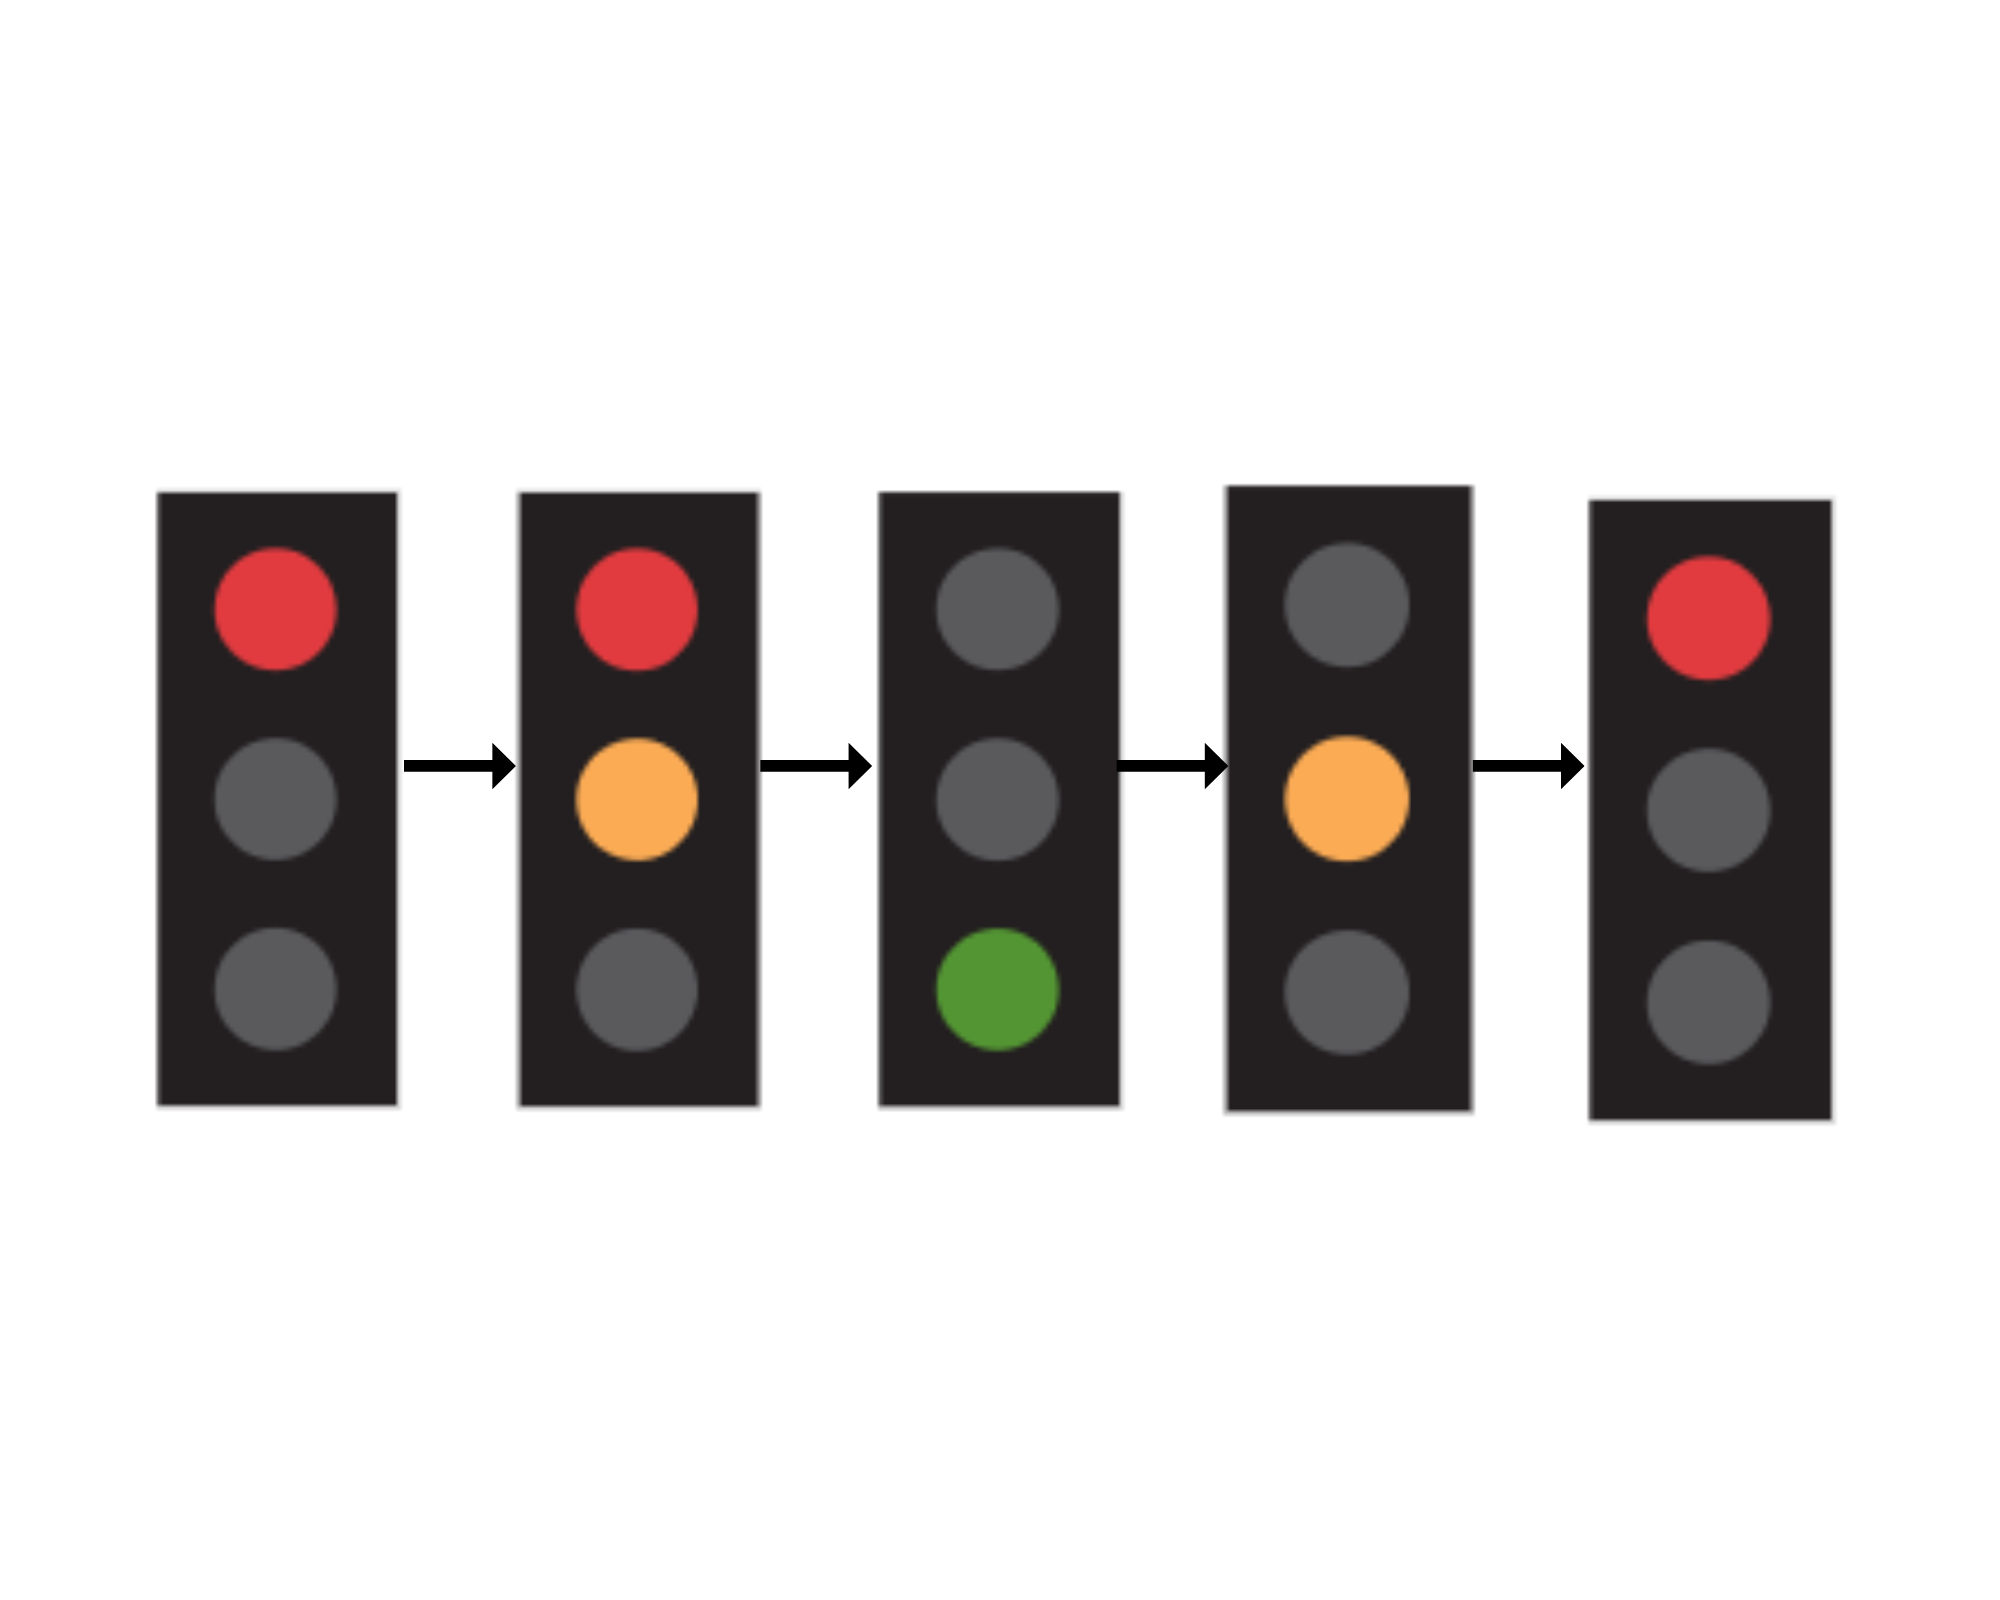 order of traffic lights